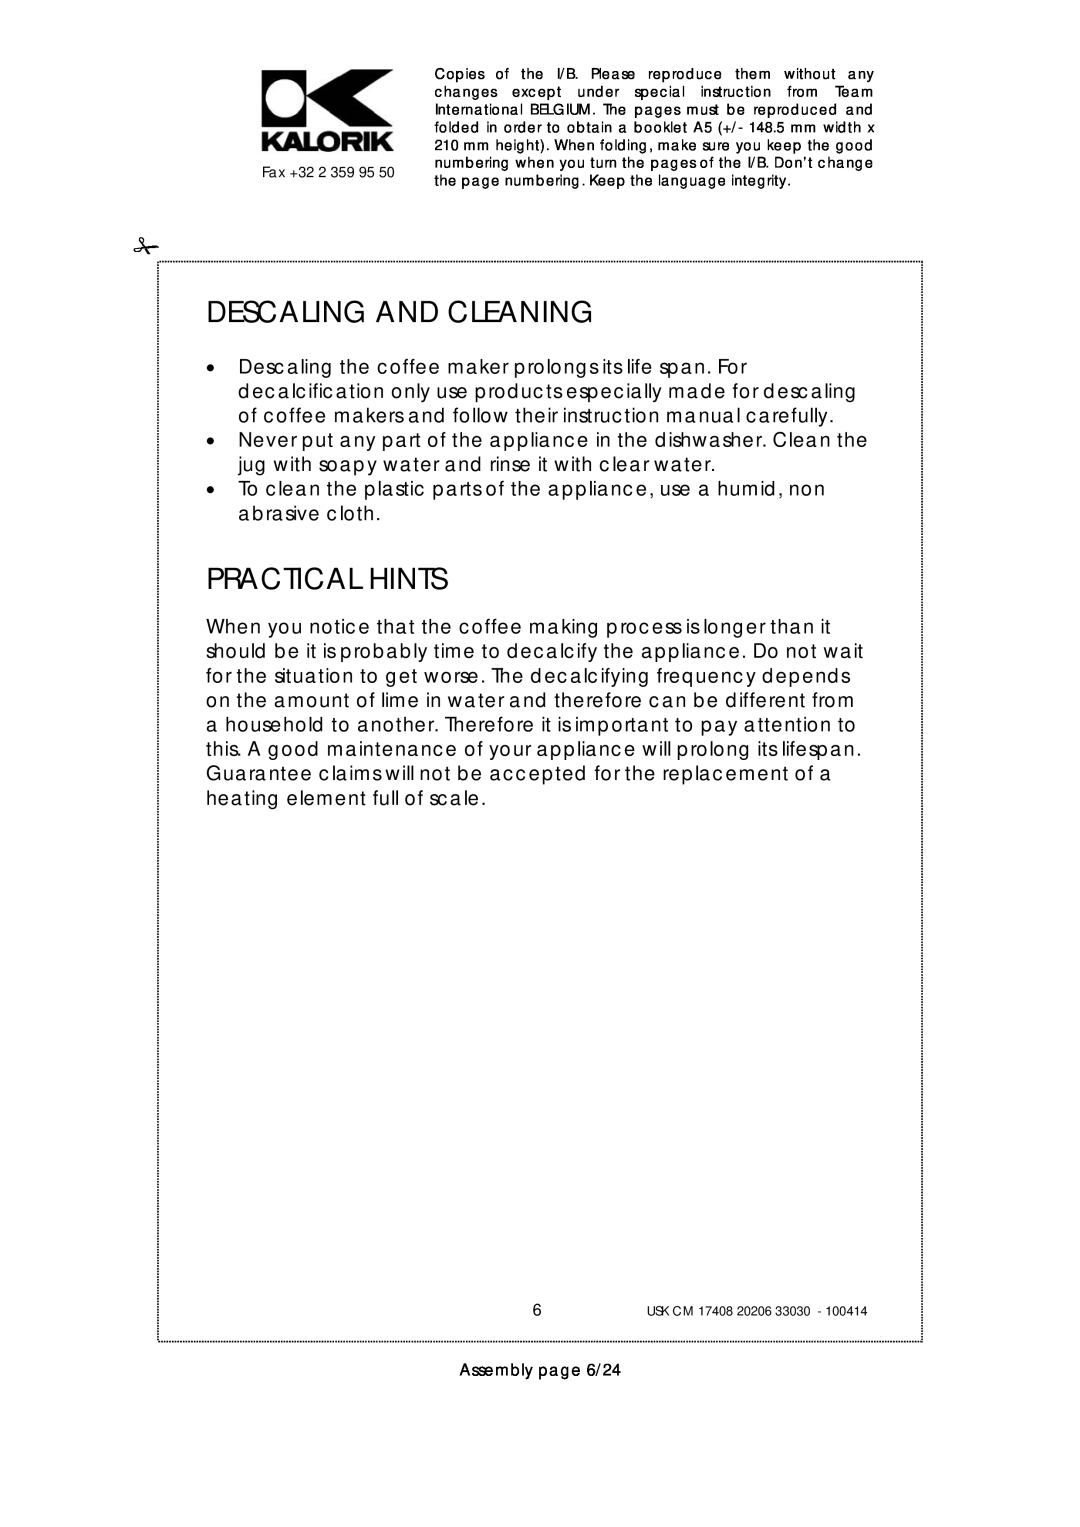 Kalorik USK CM 33030, USK CM 17408, USK CM 20206 manual Descaling And Cleaning, Practical Hints, Assembly page 6/24 